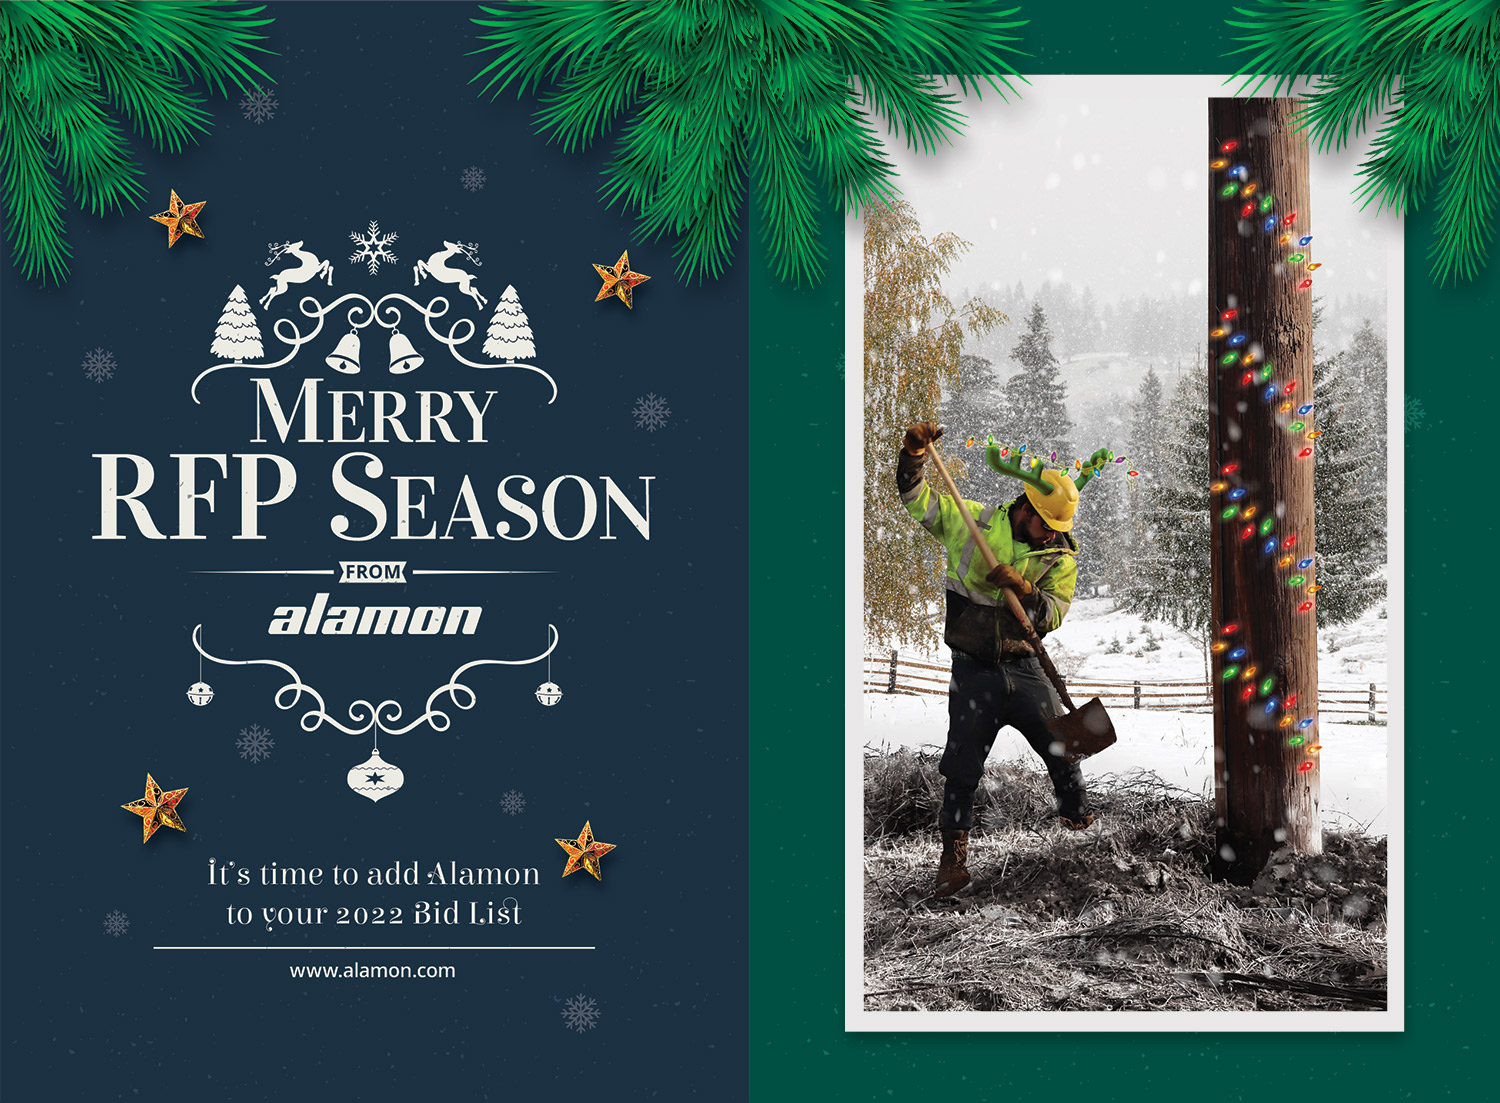 Merry RFP Season from Alamon Utility Services!